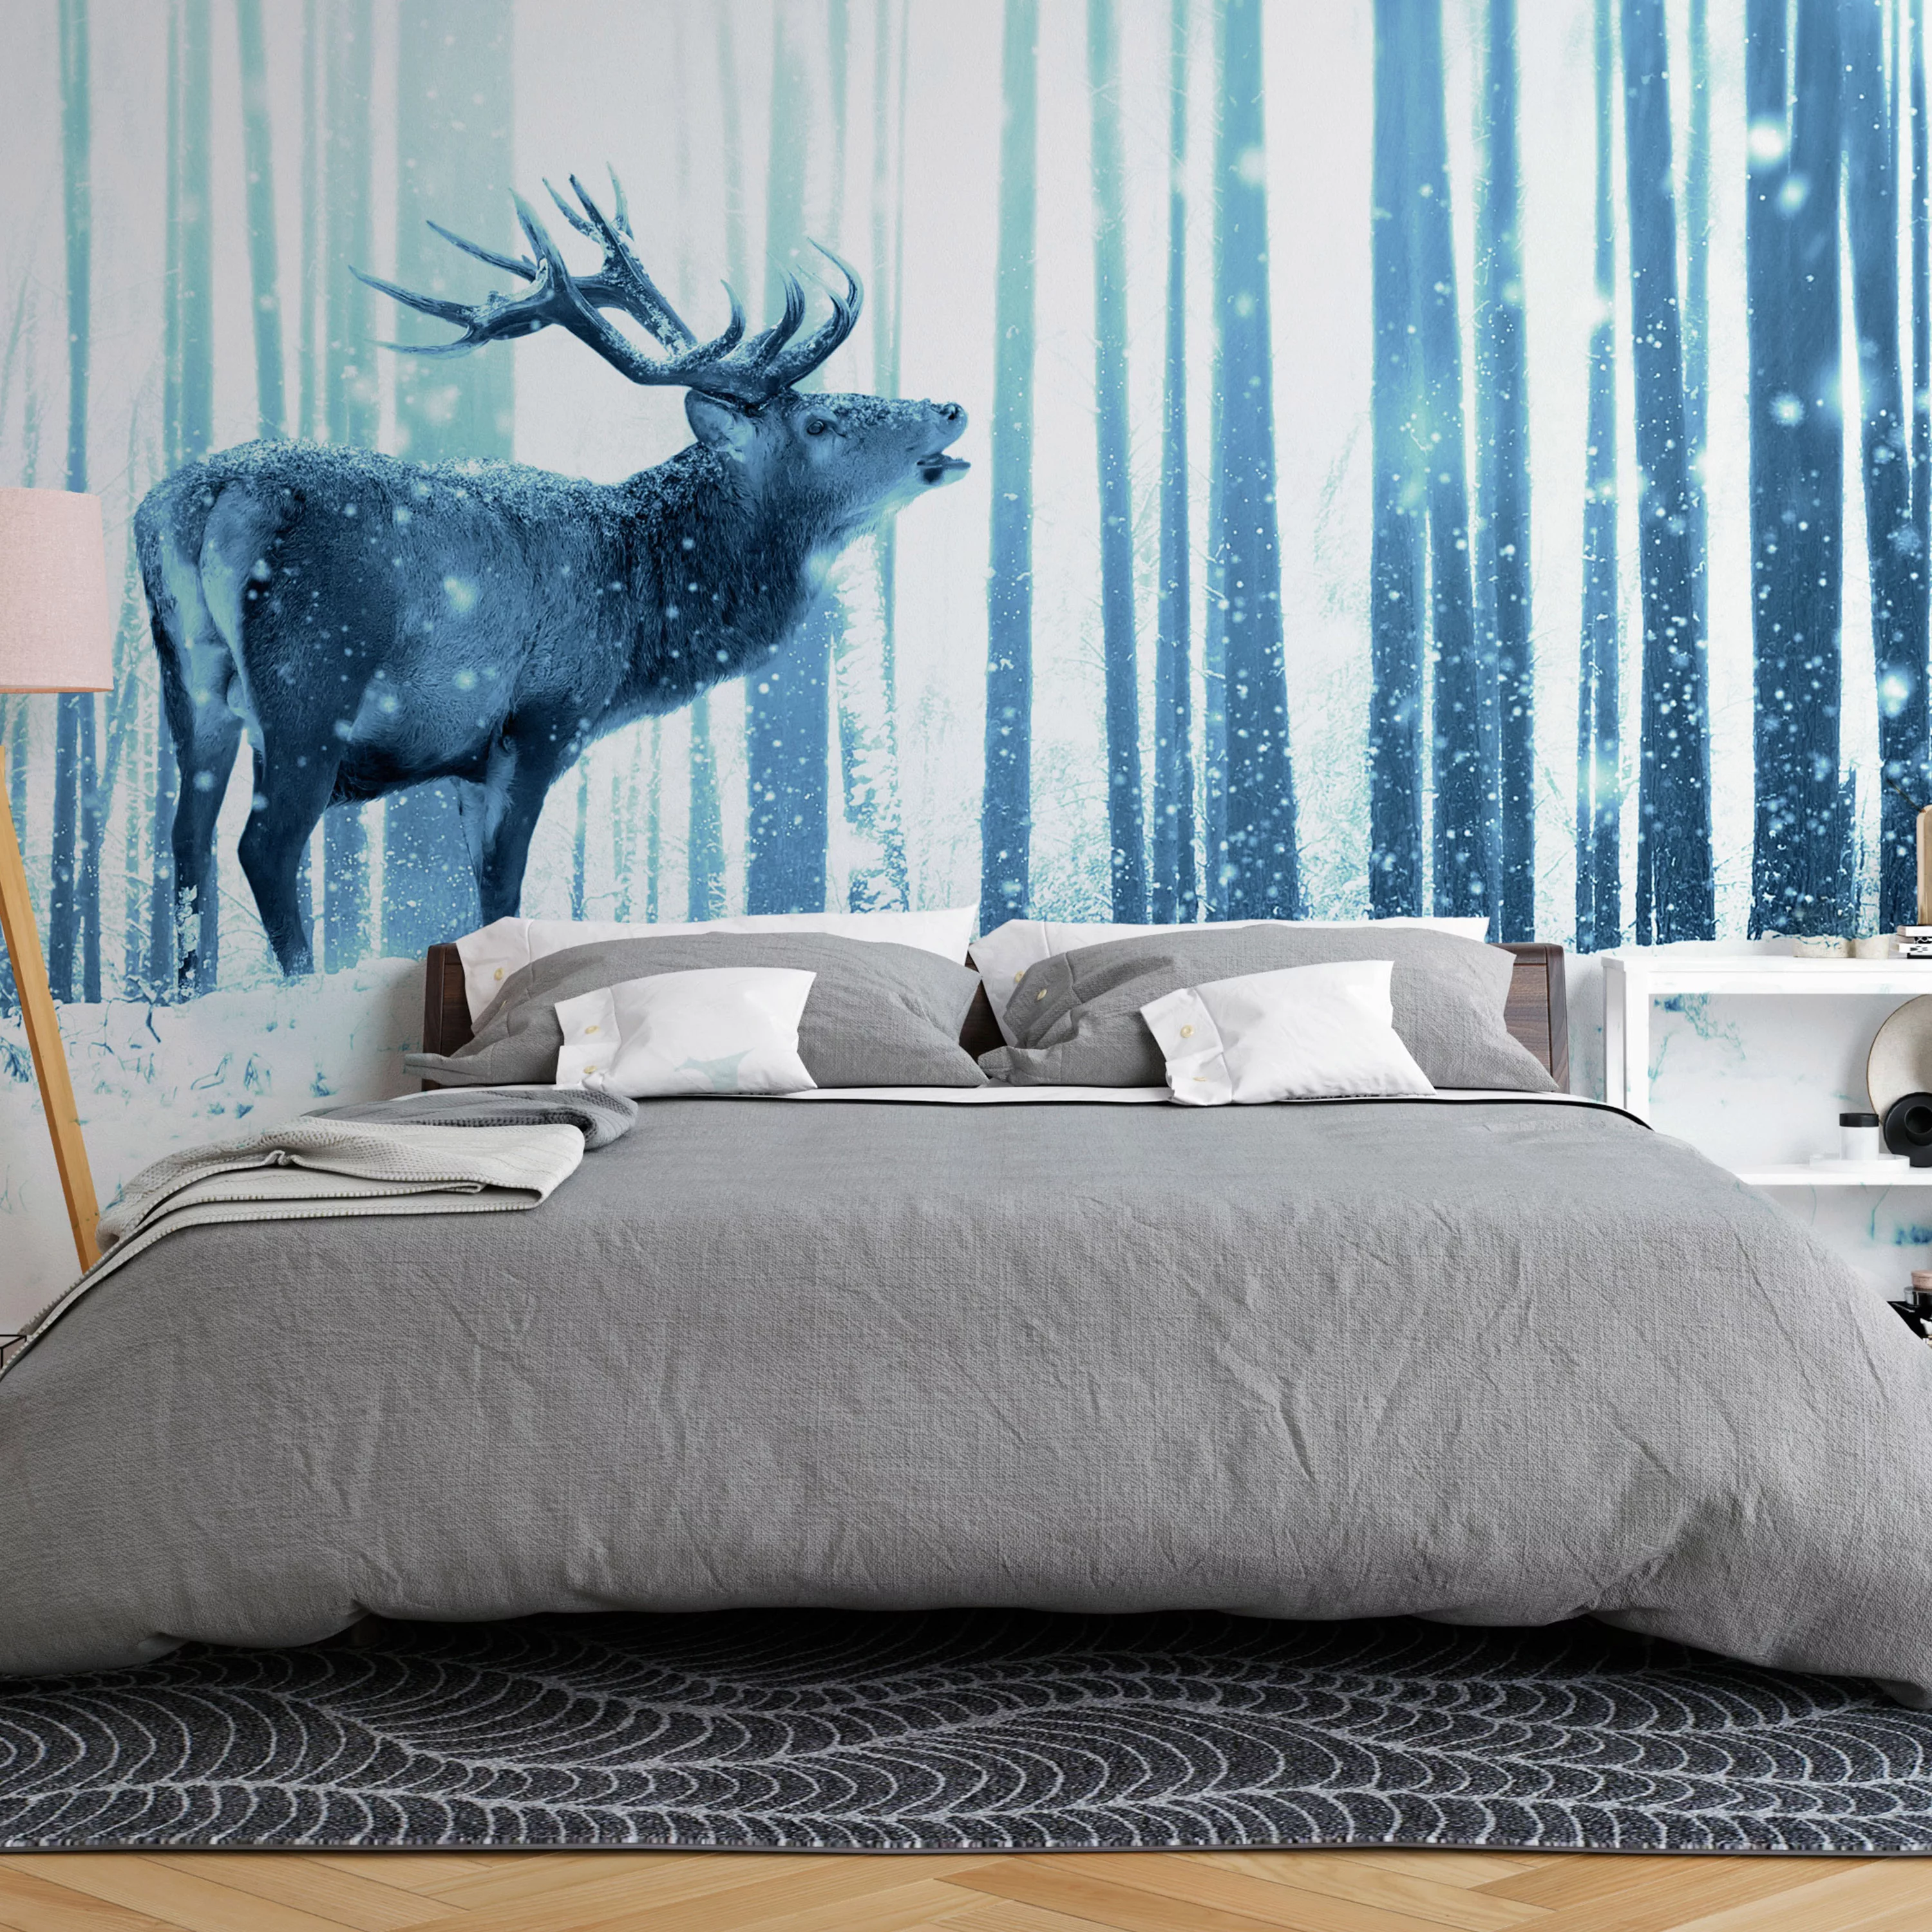 Fototapete - Deer In The Snow (blue) günstig online kaufen